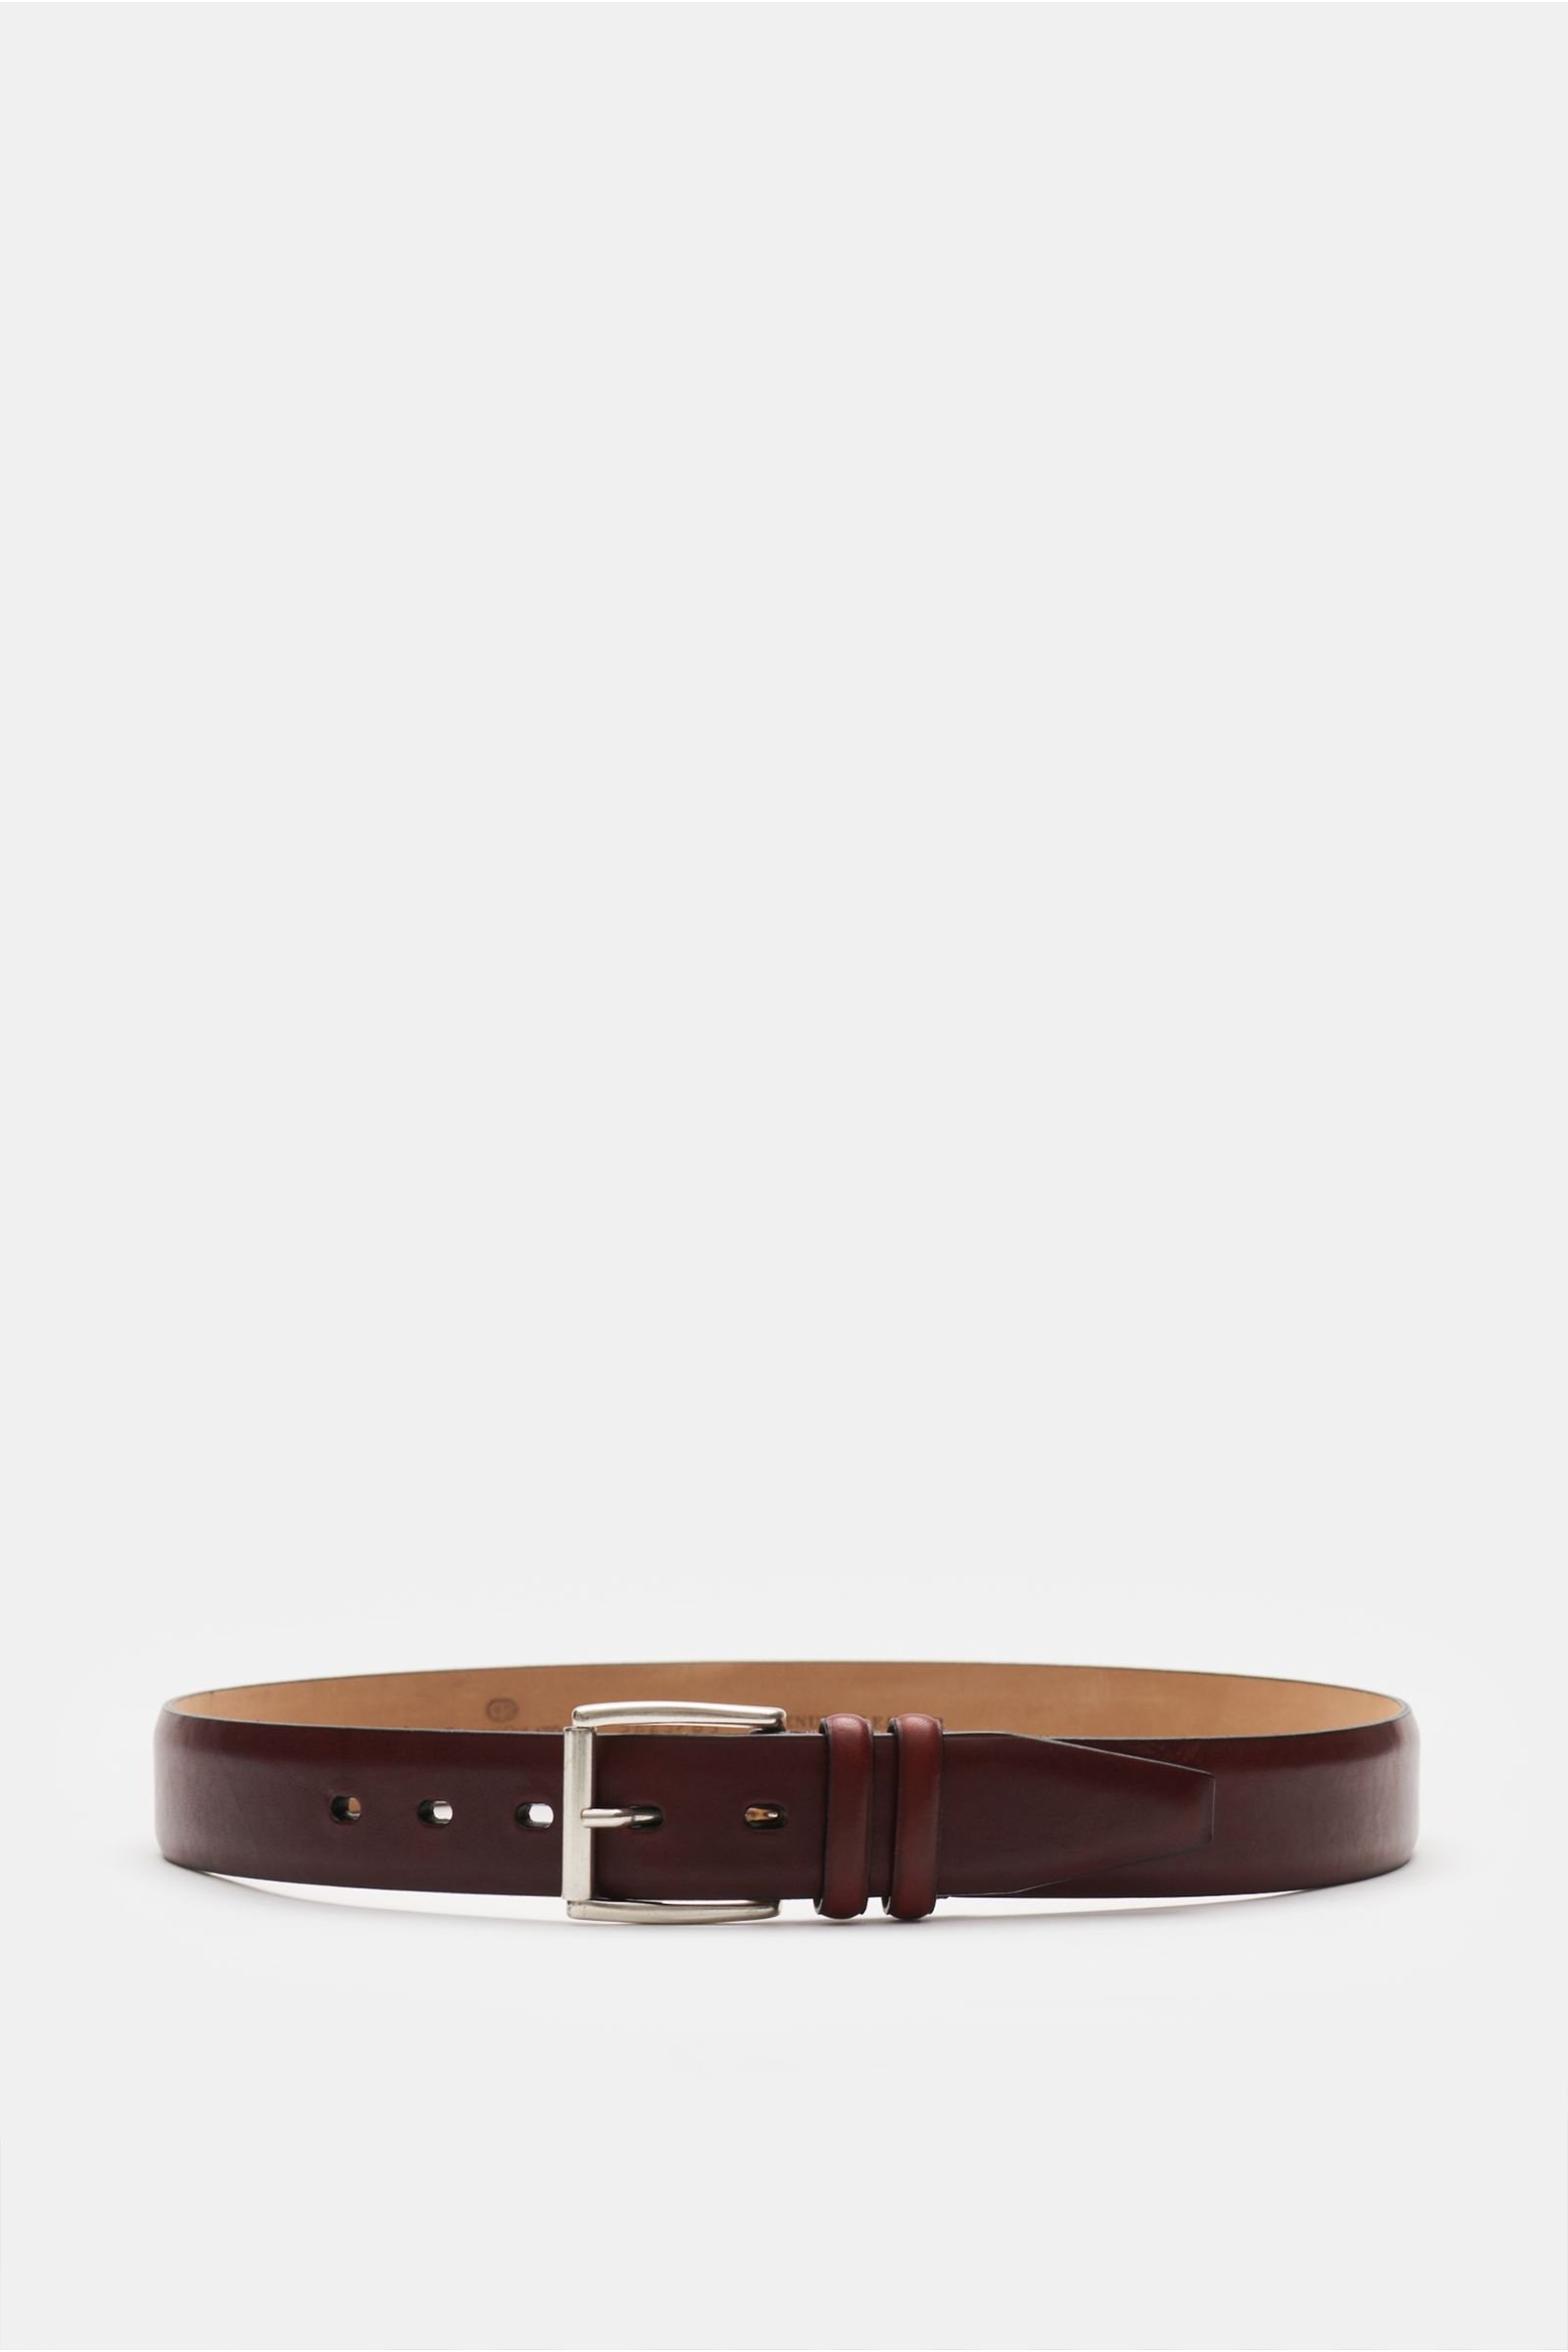 Calf leather belt burgundy